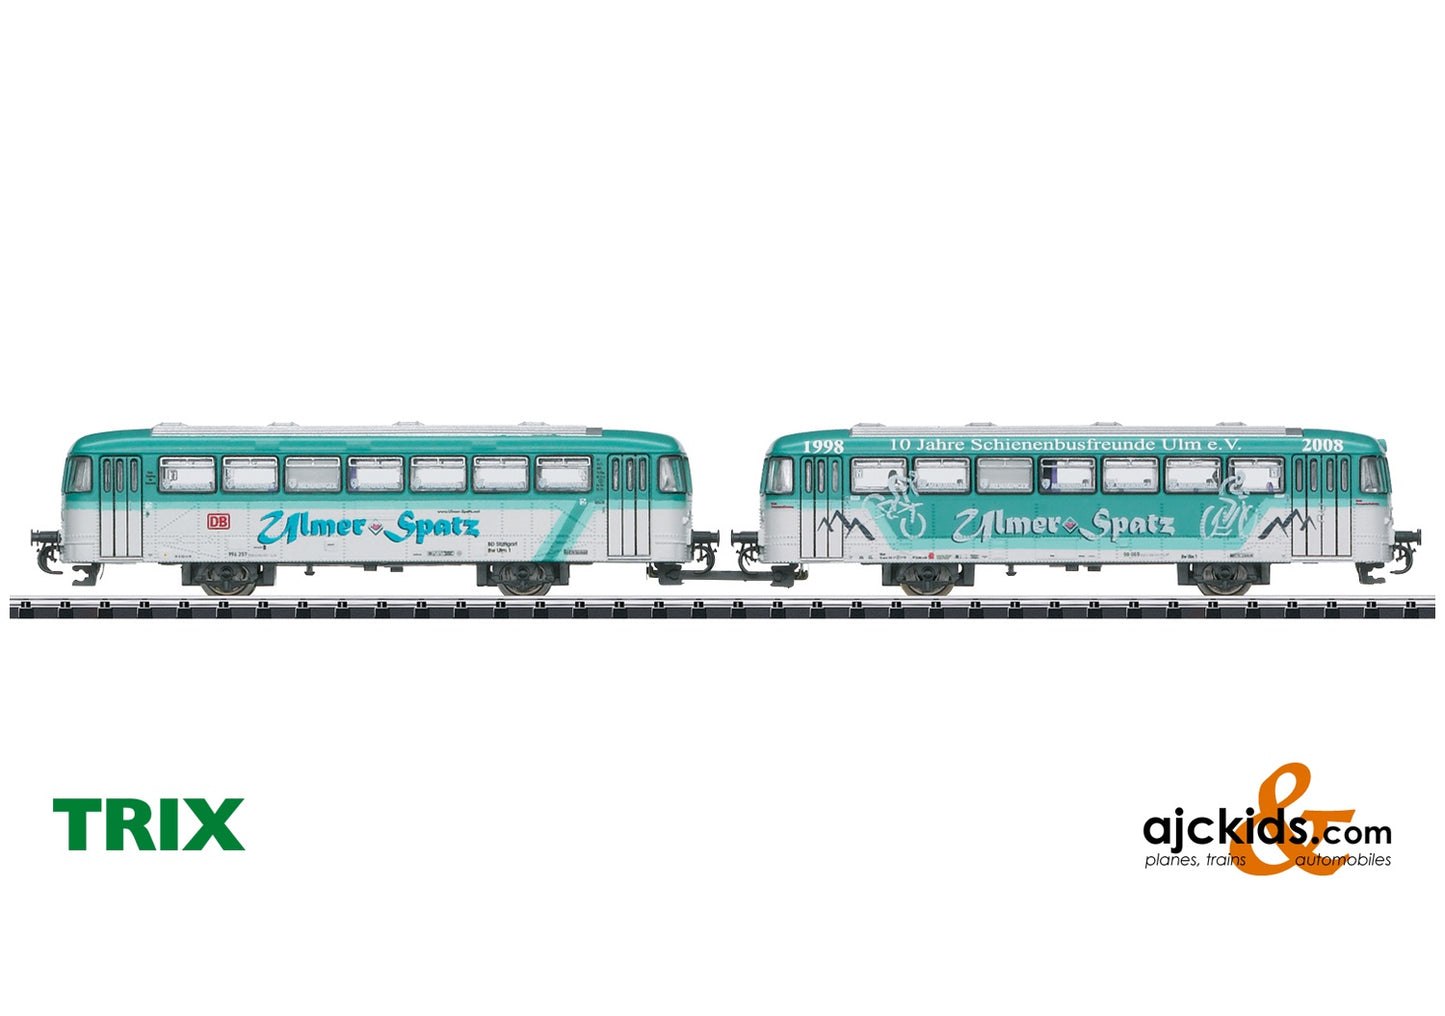 Trix 18903 - Class VB 996 and VB 998 Trailer Car Set